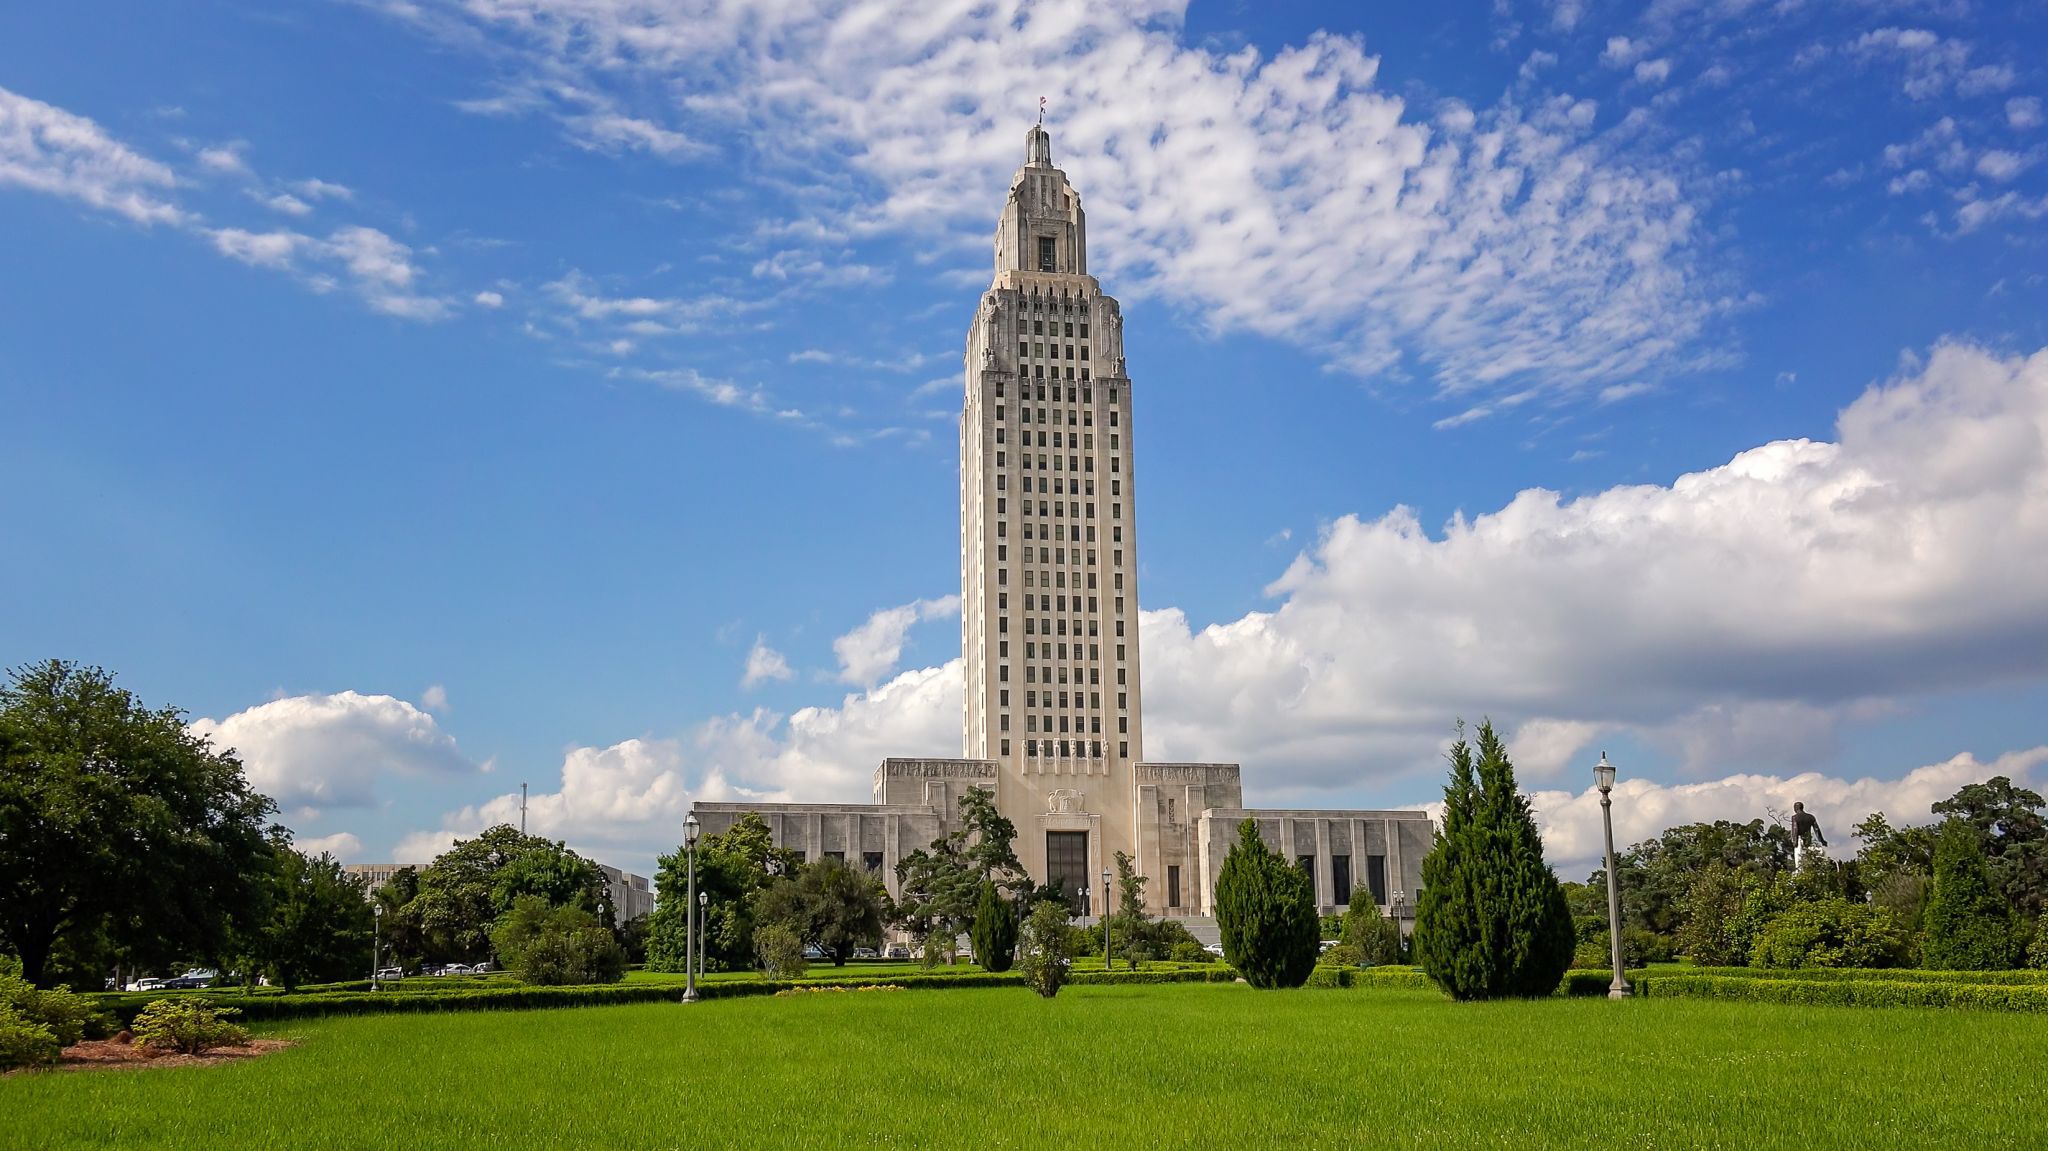 Louisiana state capitol